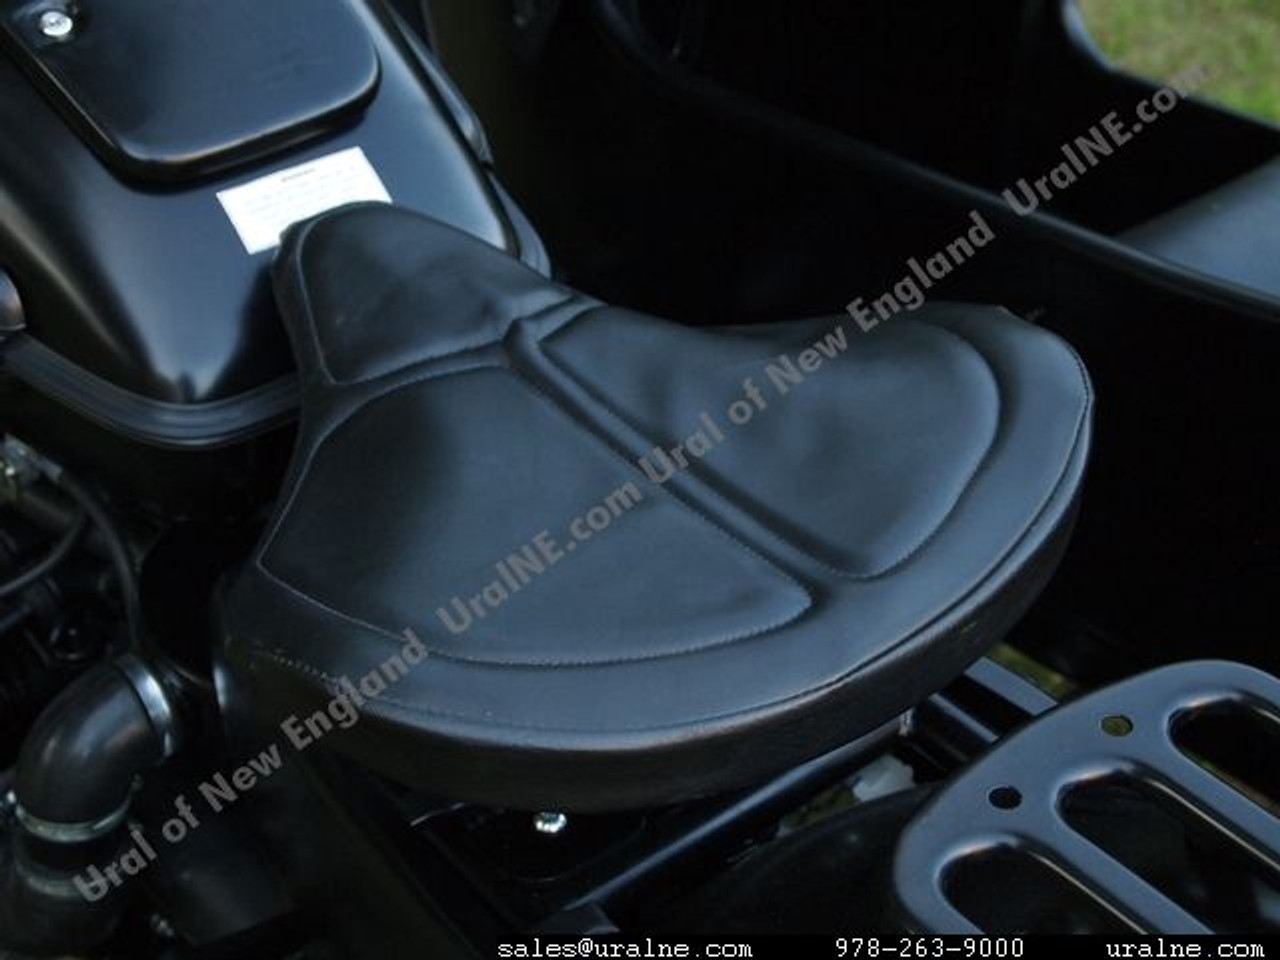 2013 Ural Gear-Up Flat Black Custom with "Adventure" Package